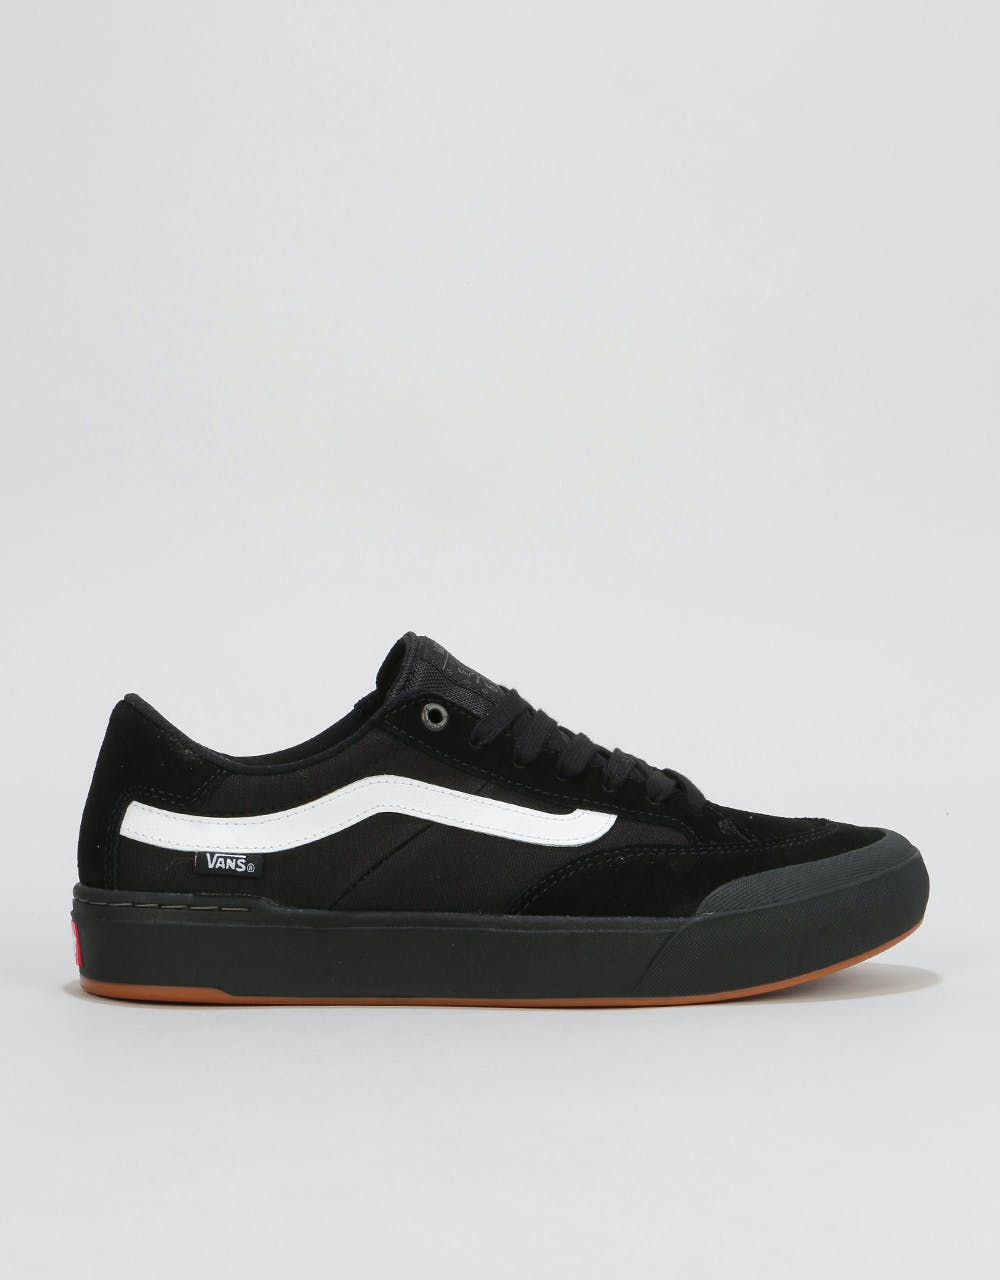 vans pro skate shoes black